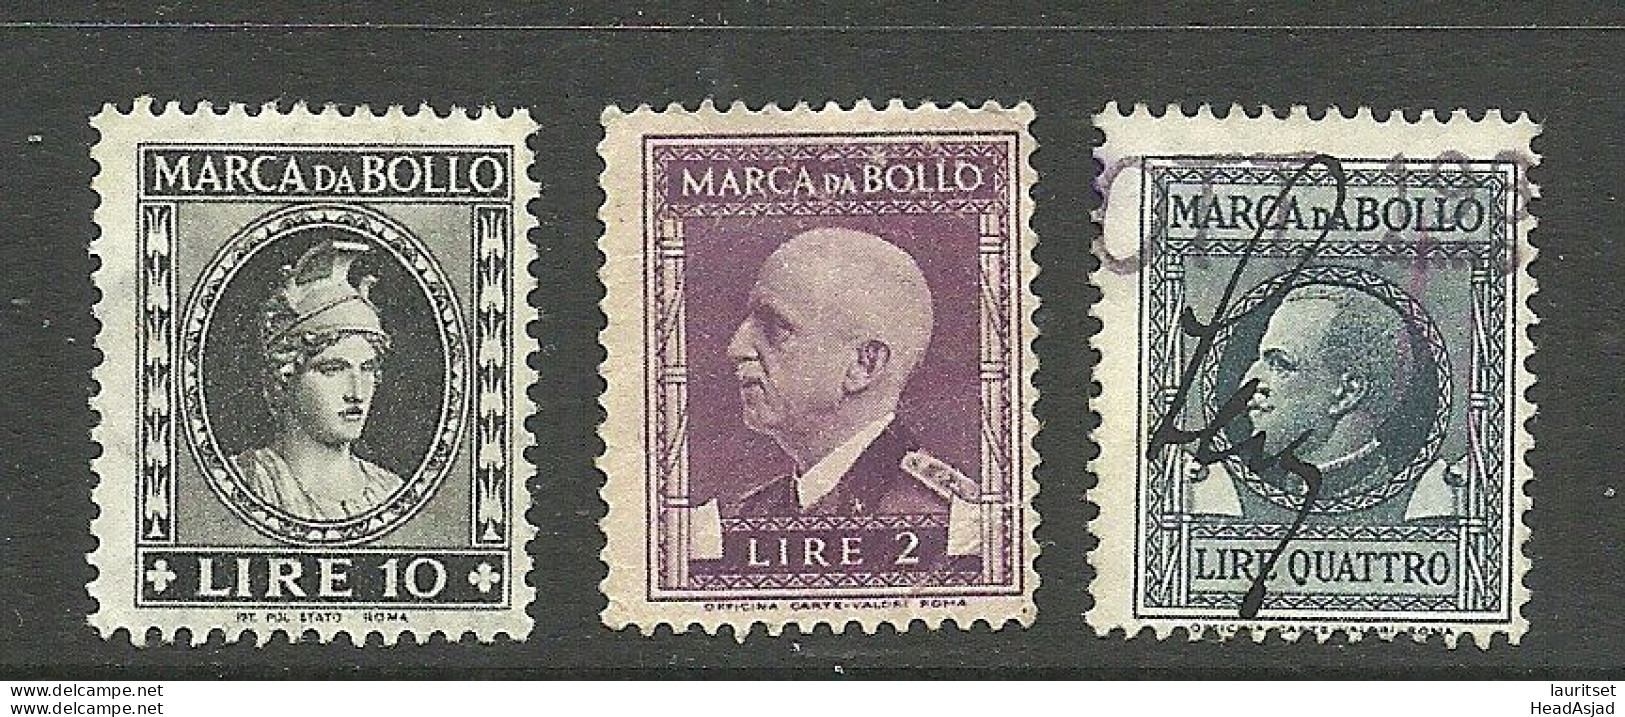 ITALIA ITALY 1920ies Revenue Marca Da Bollo Tax Taxe Steuermarken, 3 Pcs, Mint & Used - Fiscales